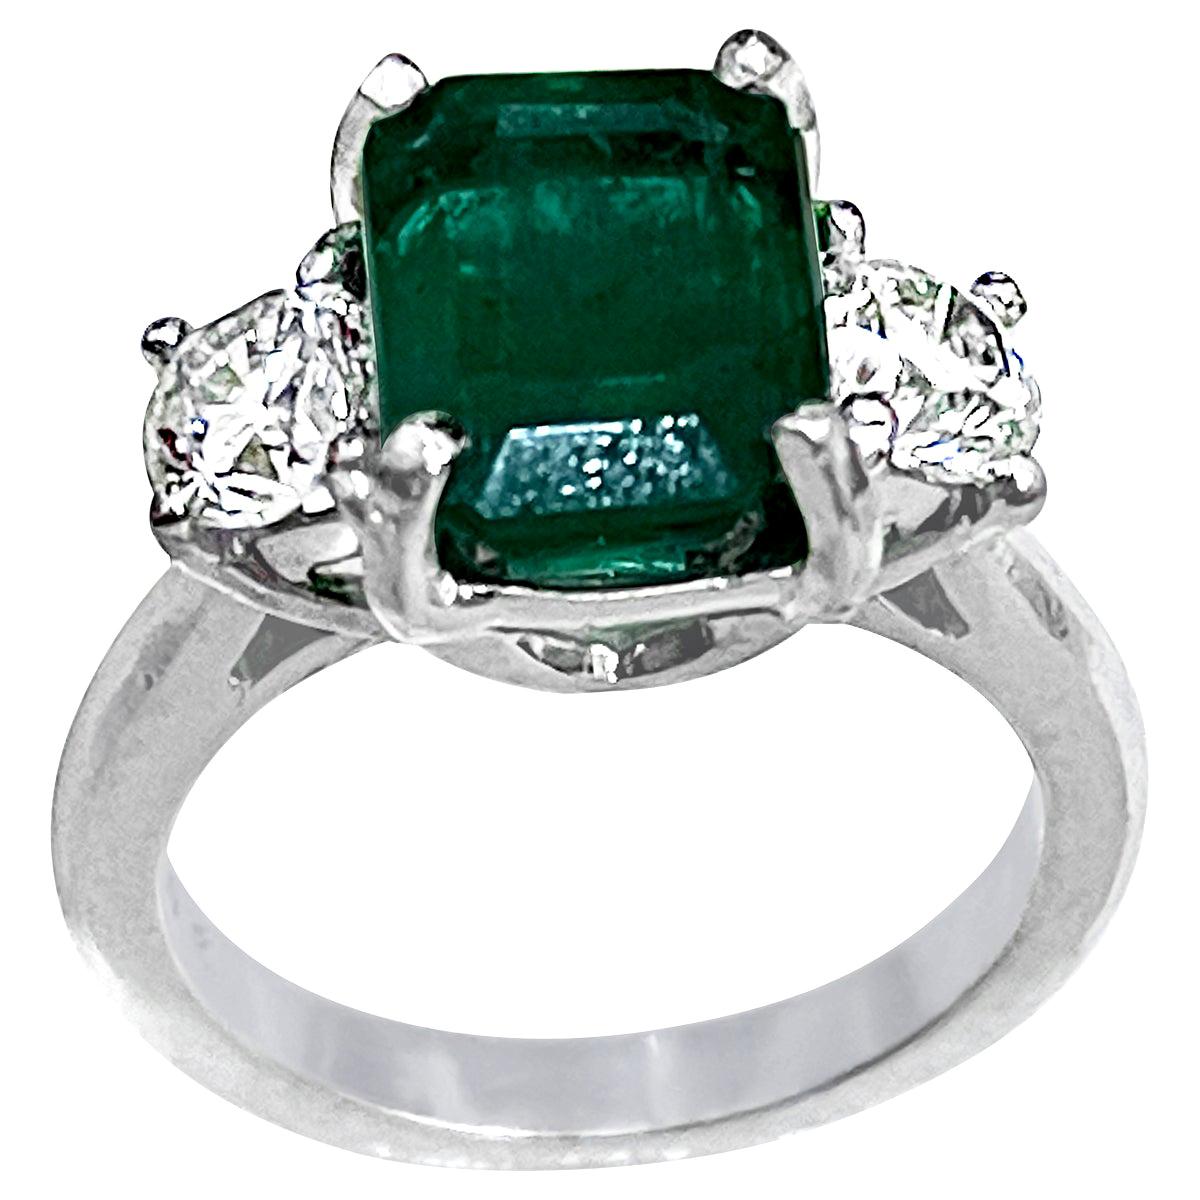 3.6 Carat Emerald Cut Emerald and 1.06 Carat Diamond Ring Platinum